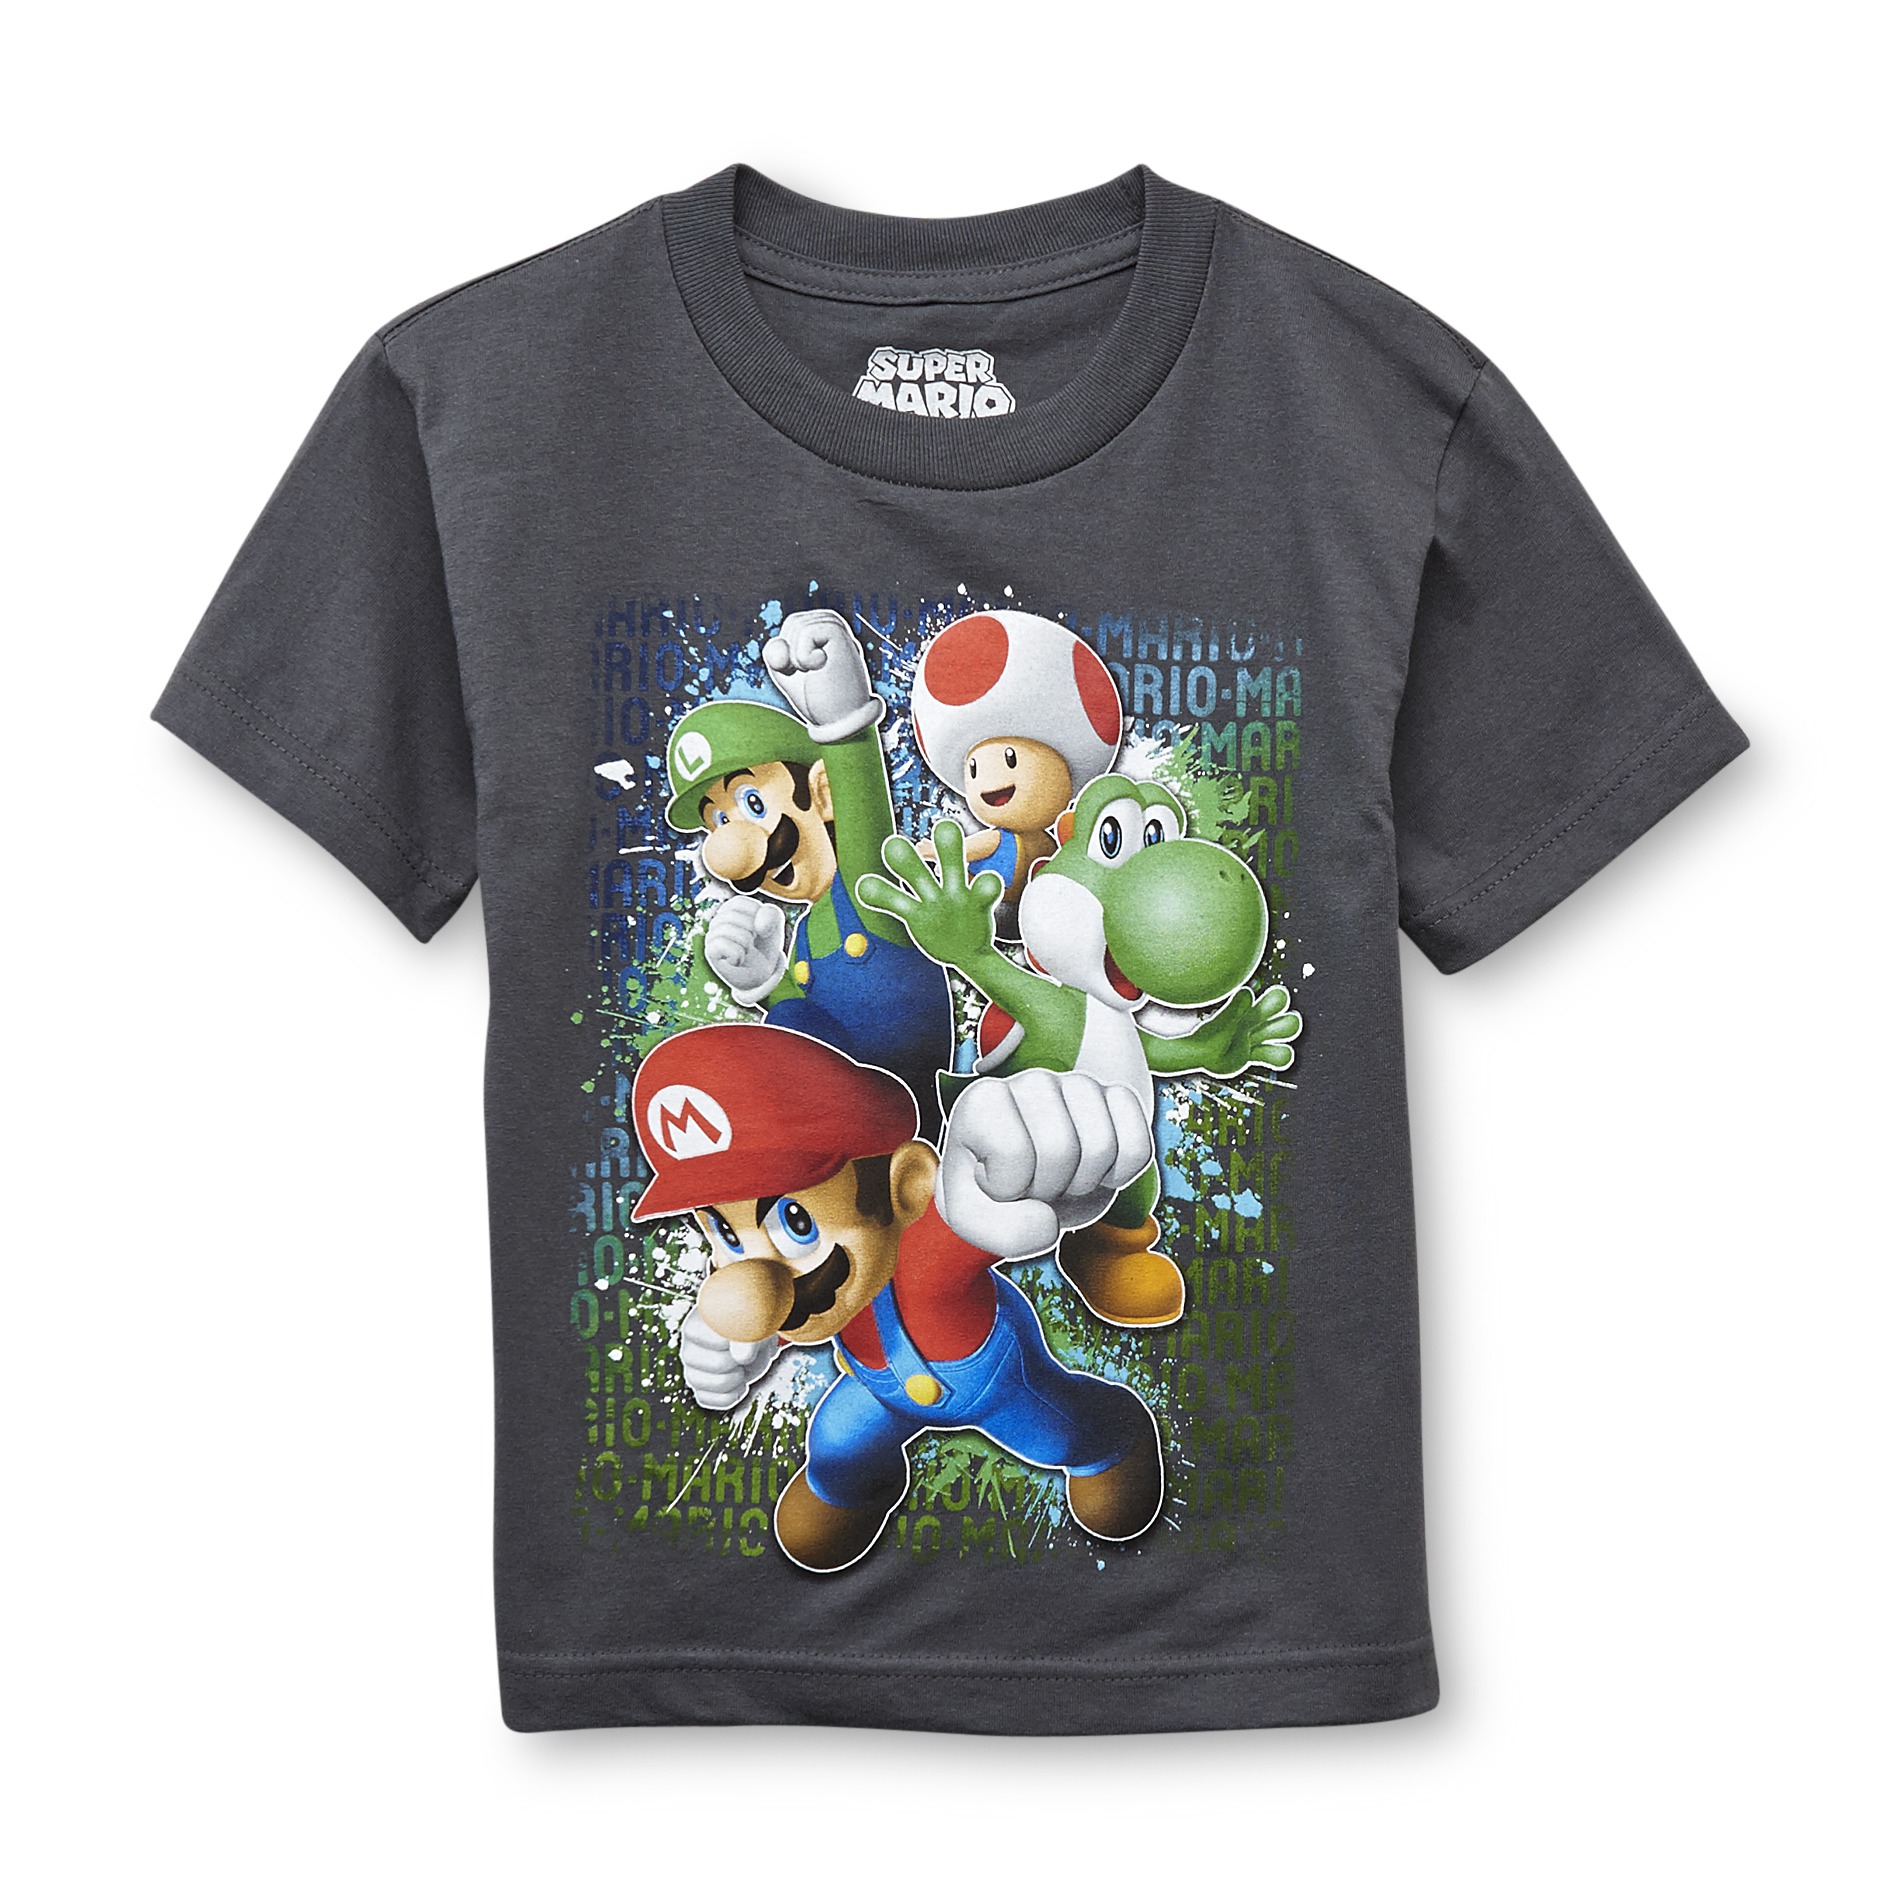 Nintendo Super Mario Bros. Boy's Graphic T-Shirt - Mario & Luigi